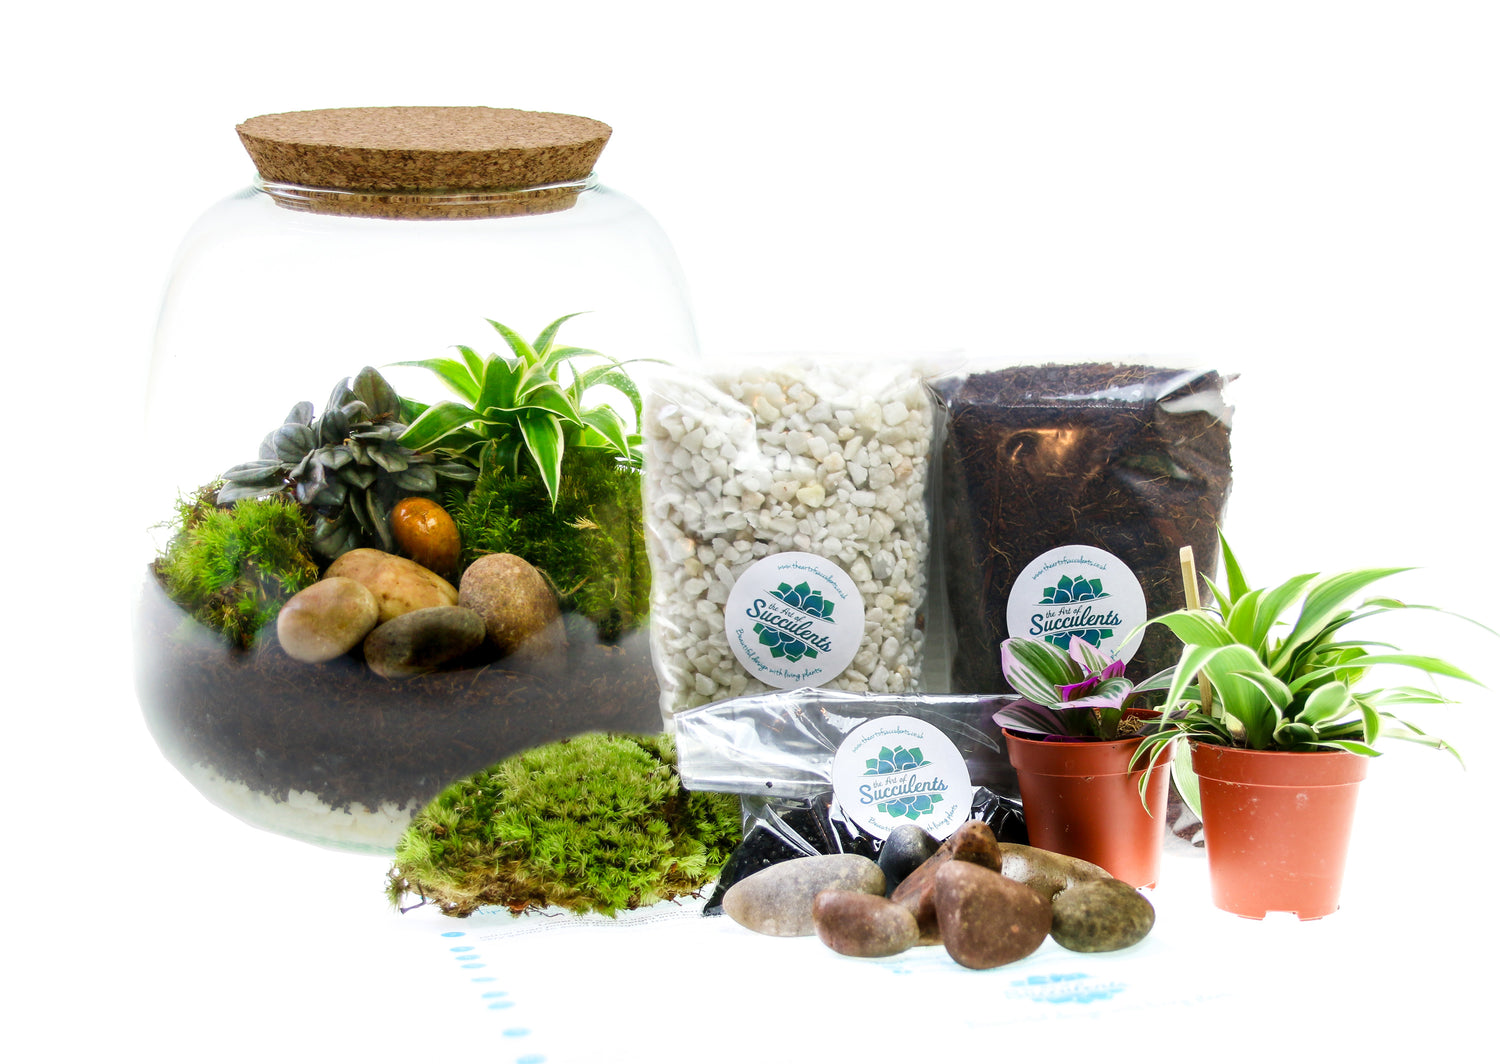 Terrarium kit with plants, gift ideas